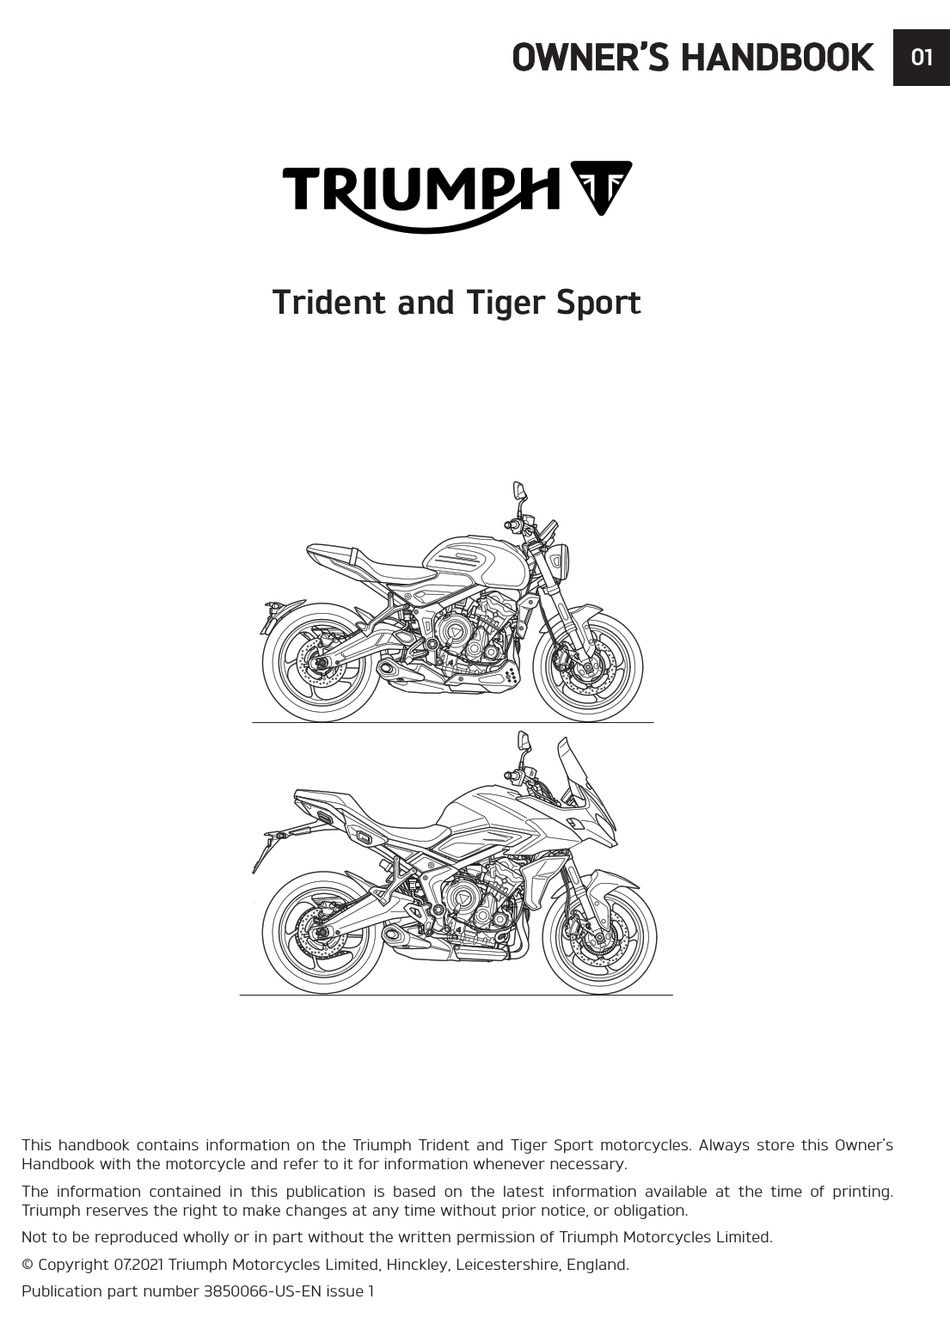 Triumph Trident Owners Handbook Manual Pdf Download Manualslib 